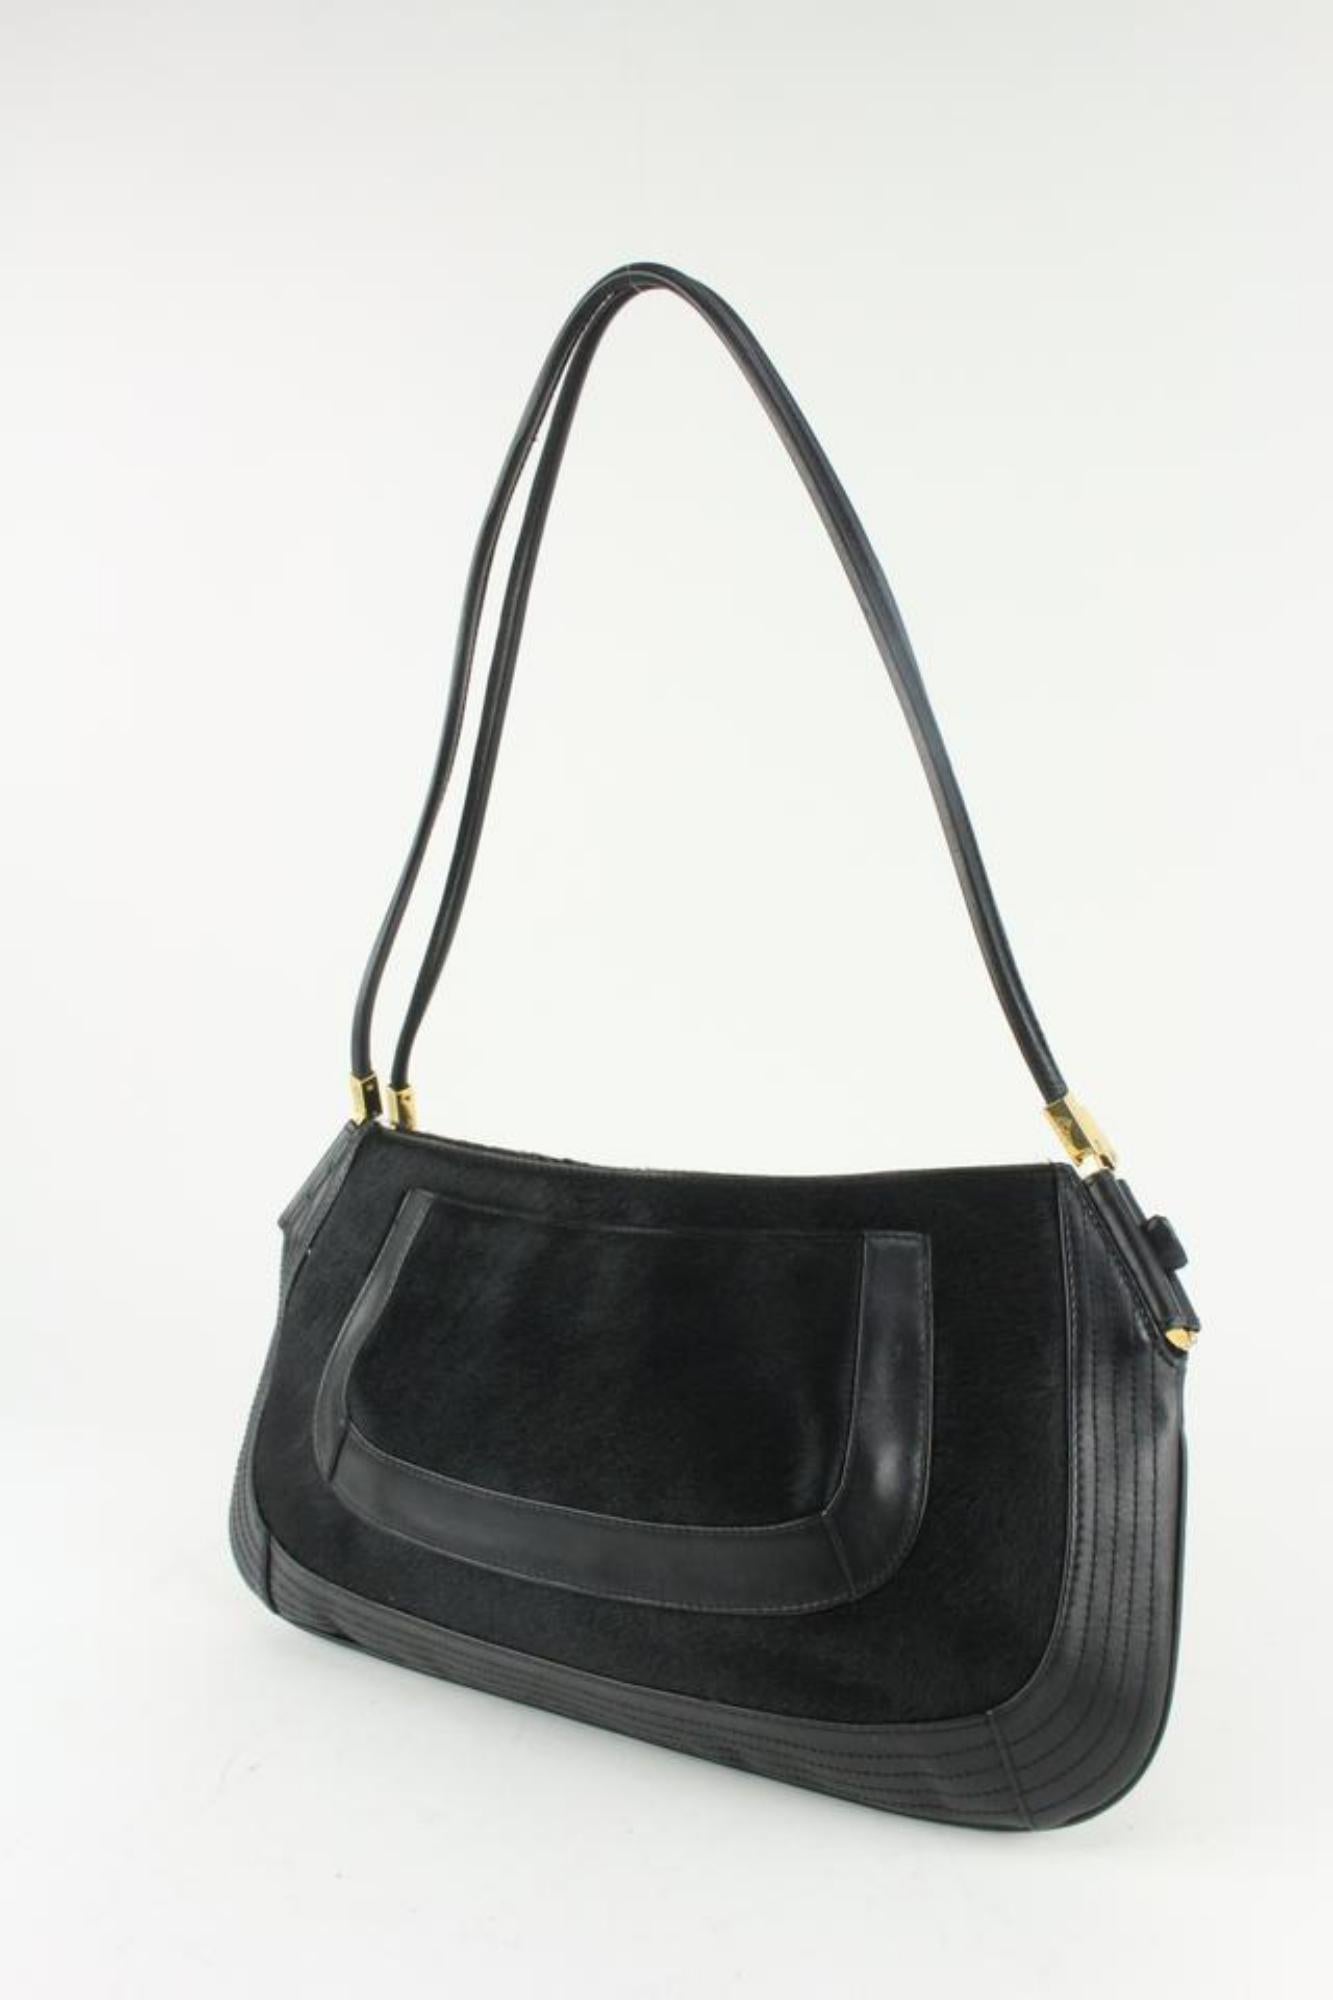 Versace Black x Gold Pony Hair Fur Shoulder bag 2V211s
Made In: Italy
Measurements: Length:  14.5